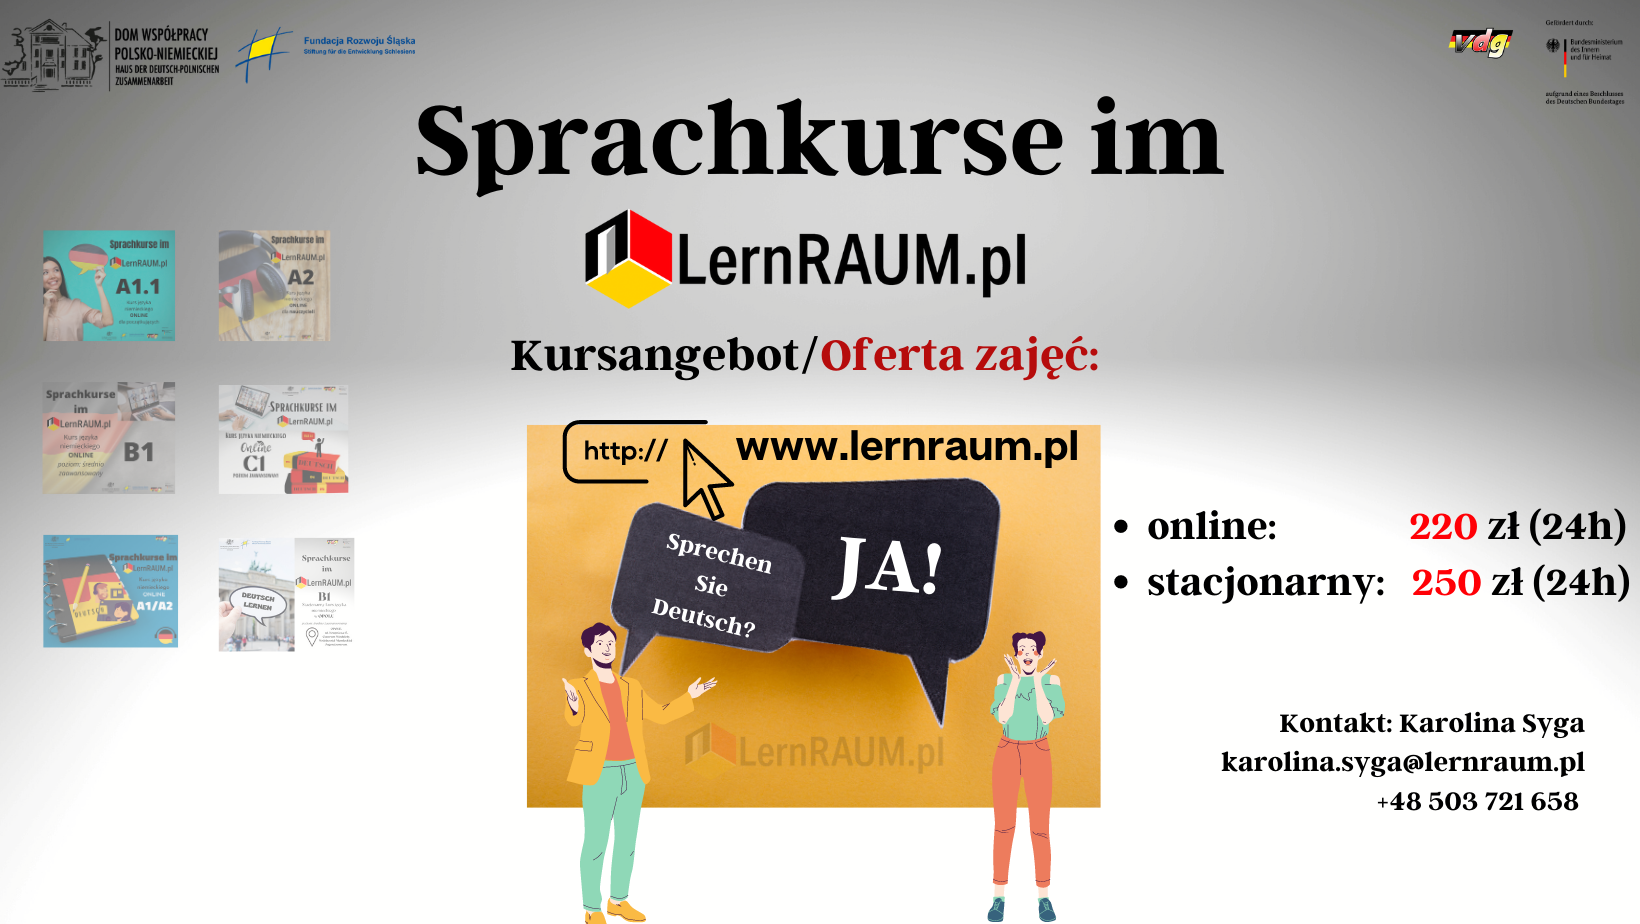 LernRAUM.pl